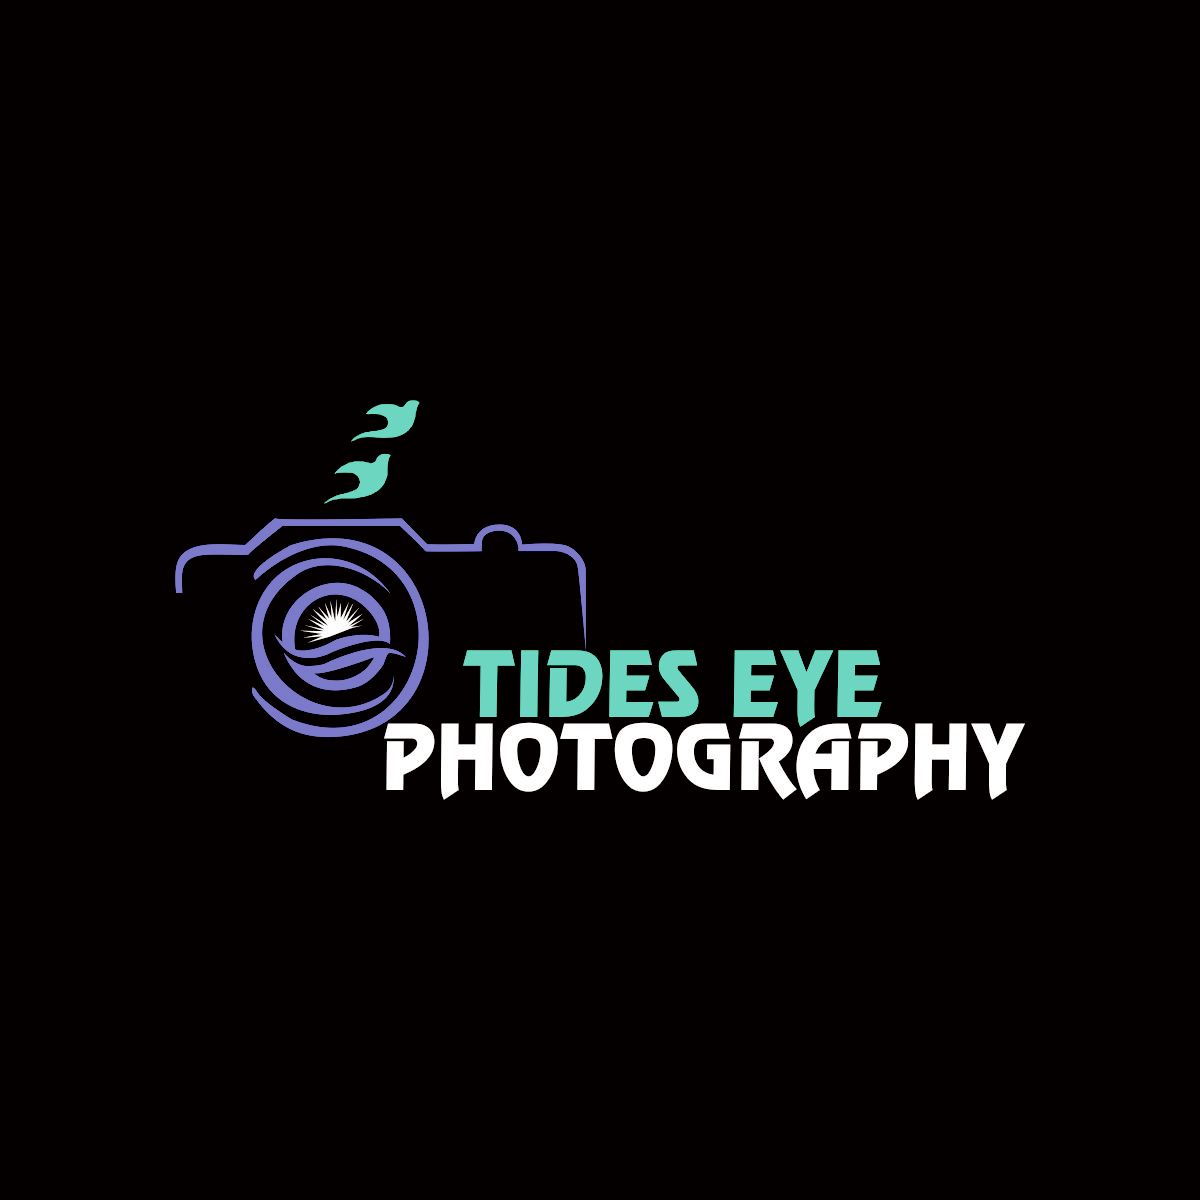 Tides Eye Photography logo